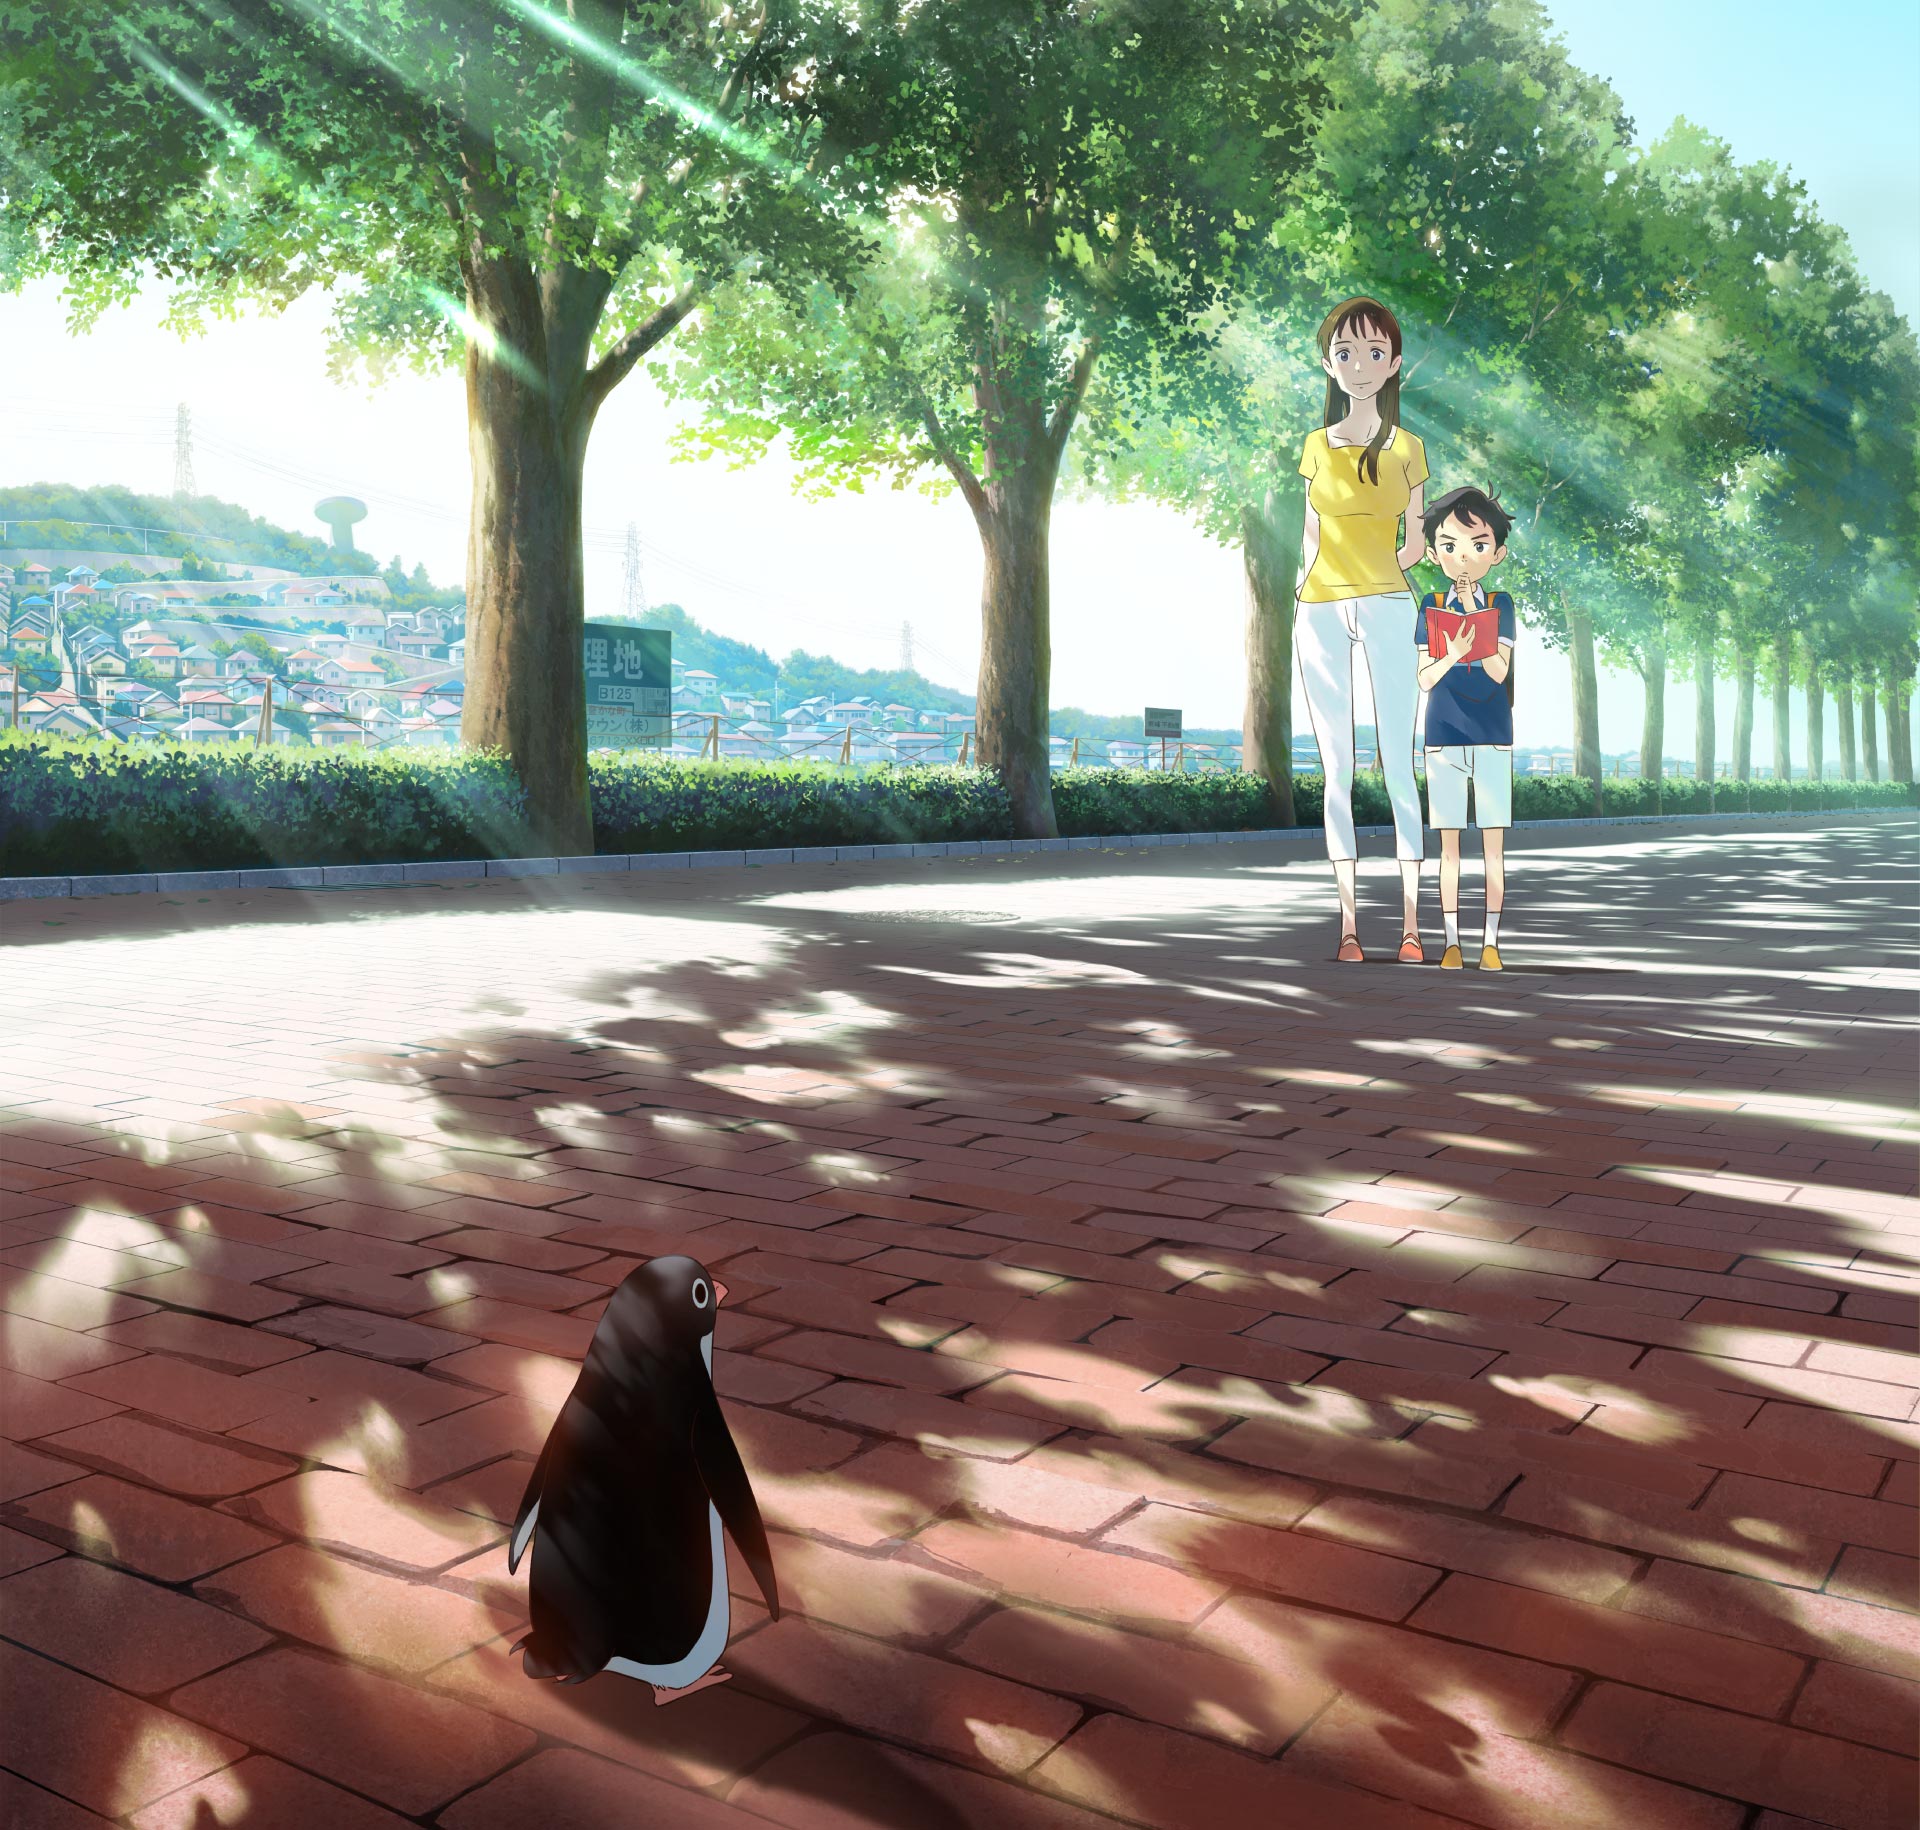 Penguin Highway – All the Anime